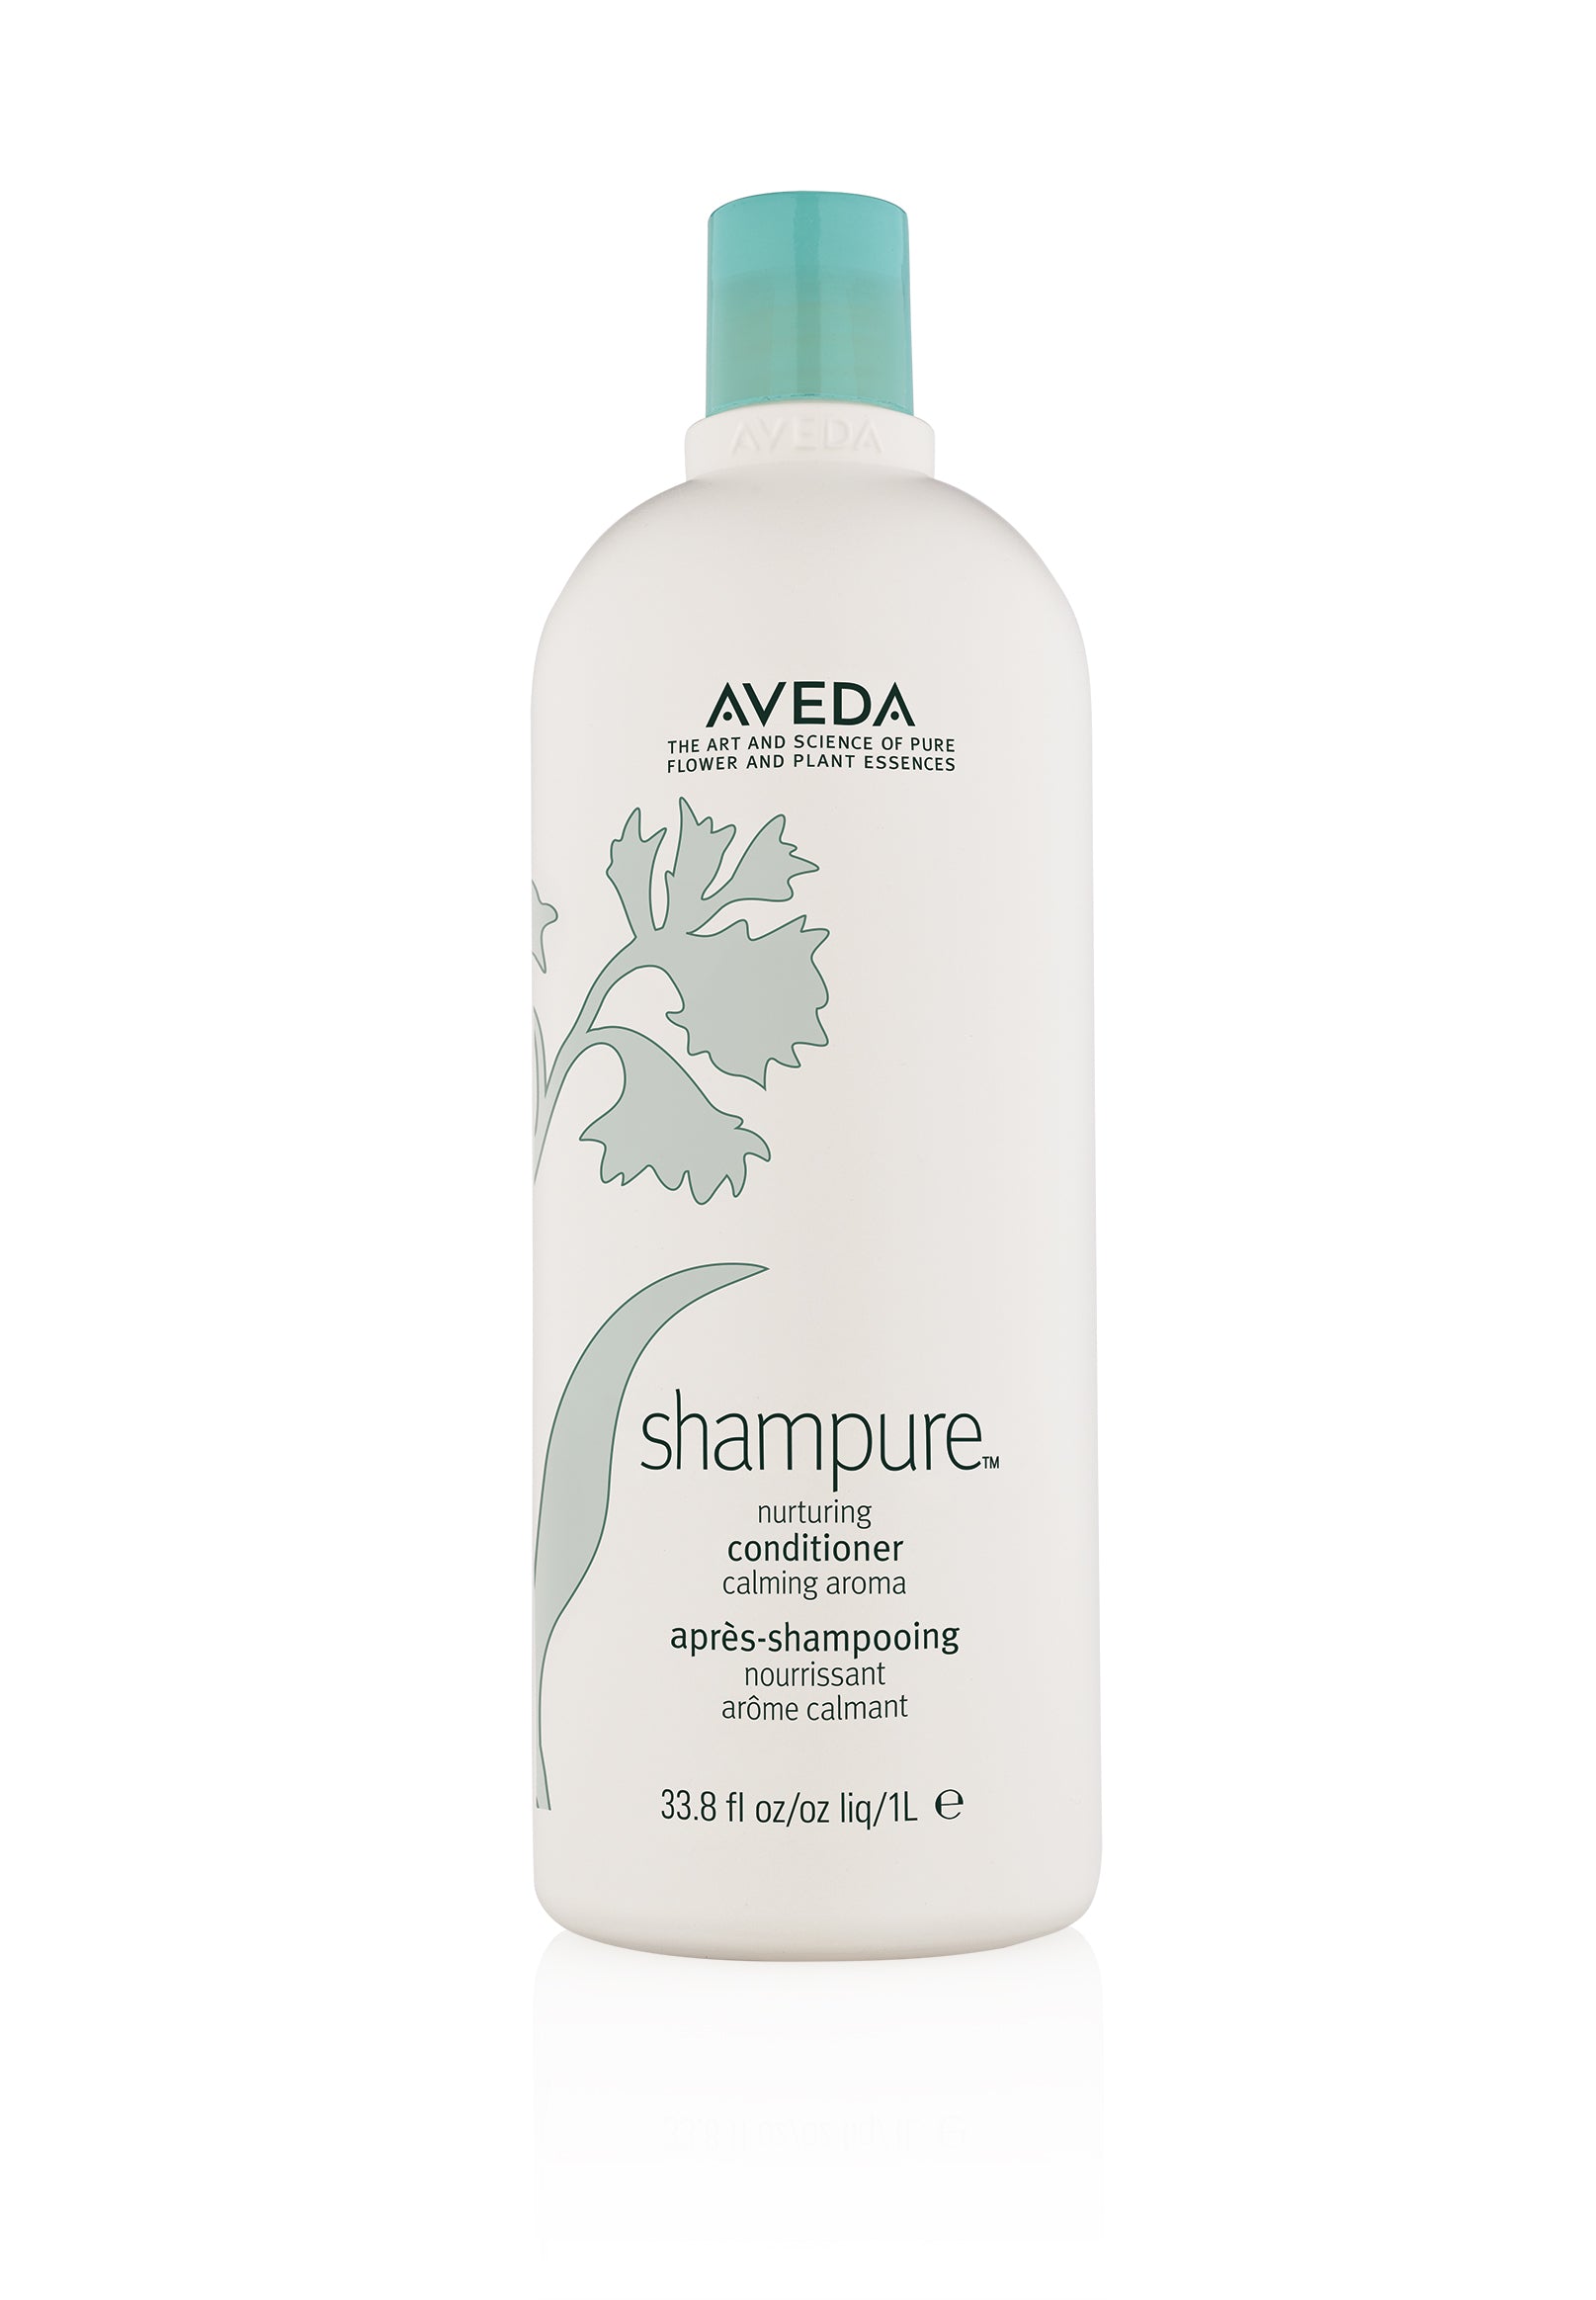 aveda shampure conditioner - 1 litre bottle